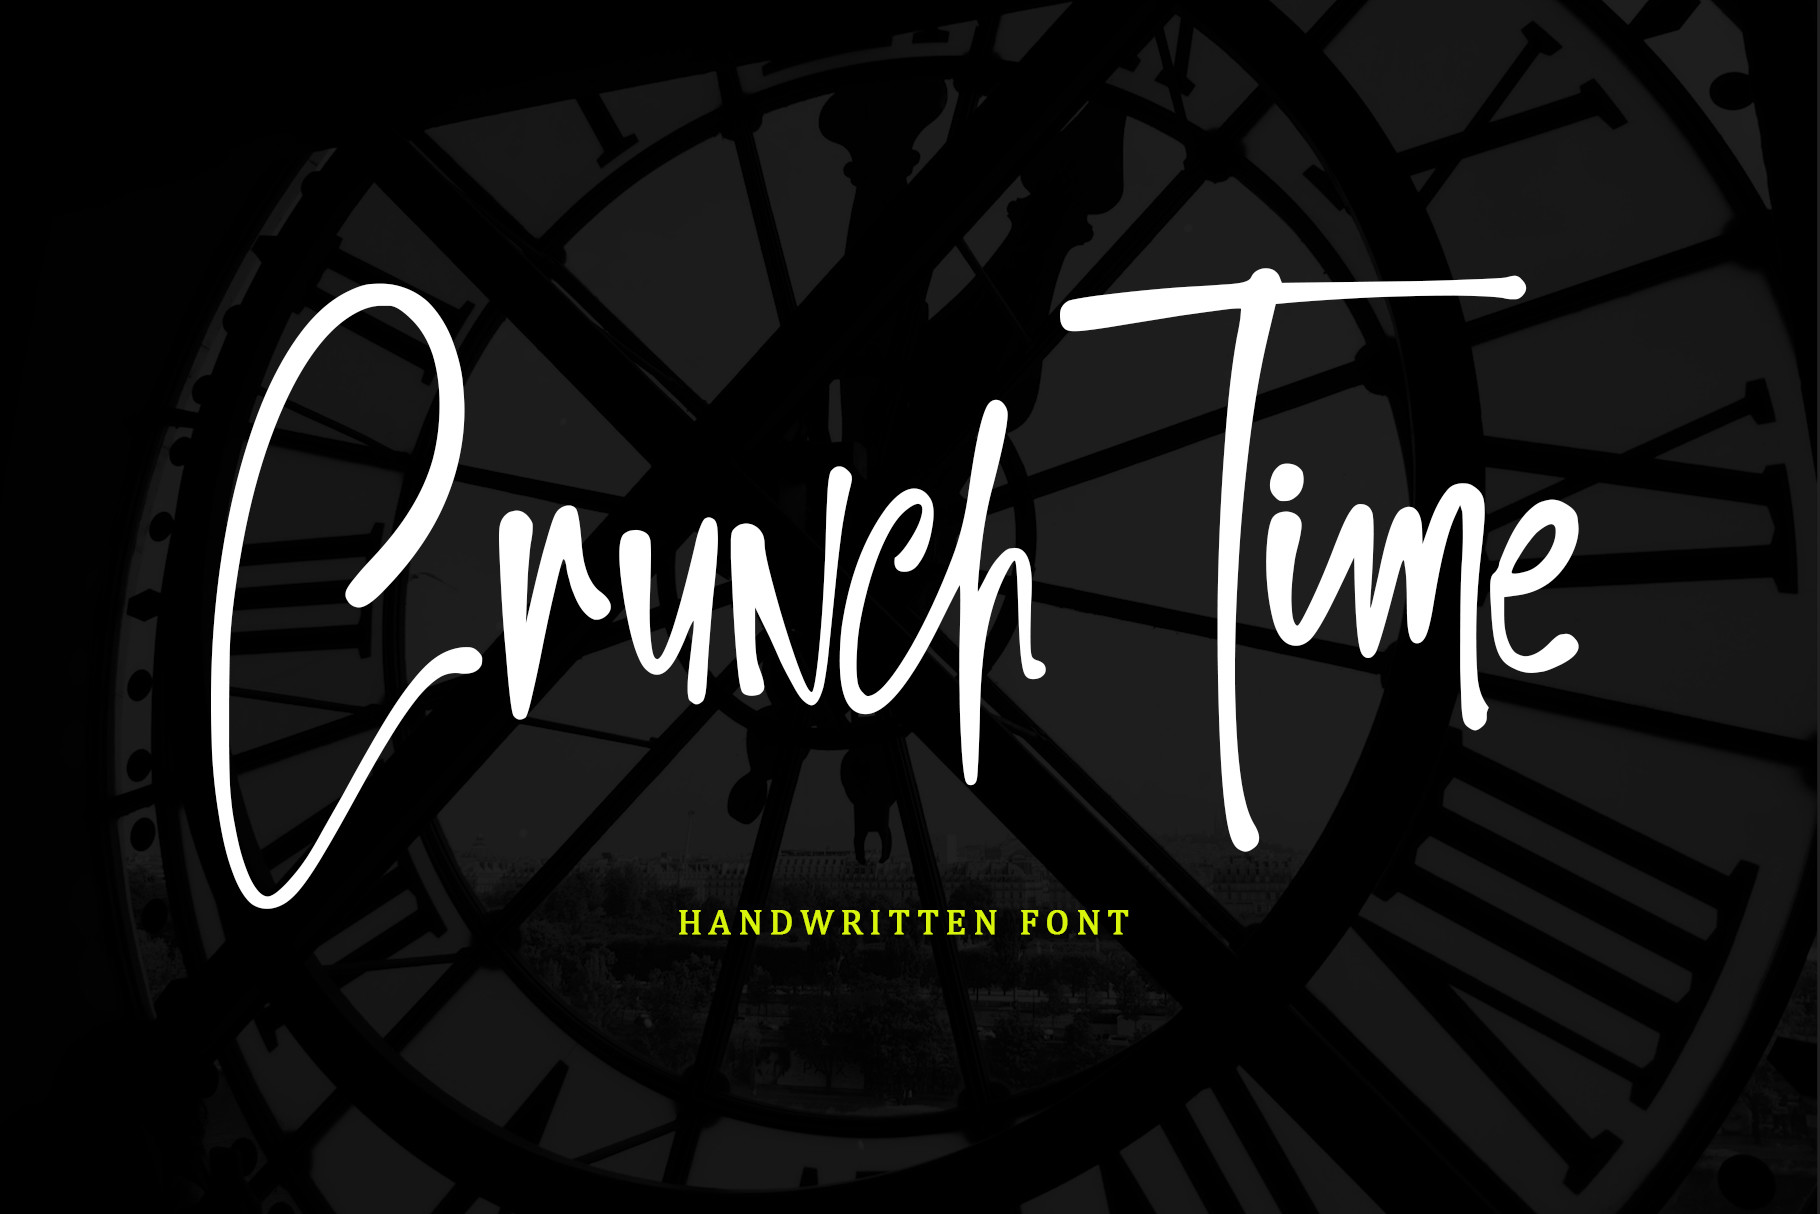 Шрифт Crunch Time